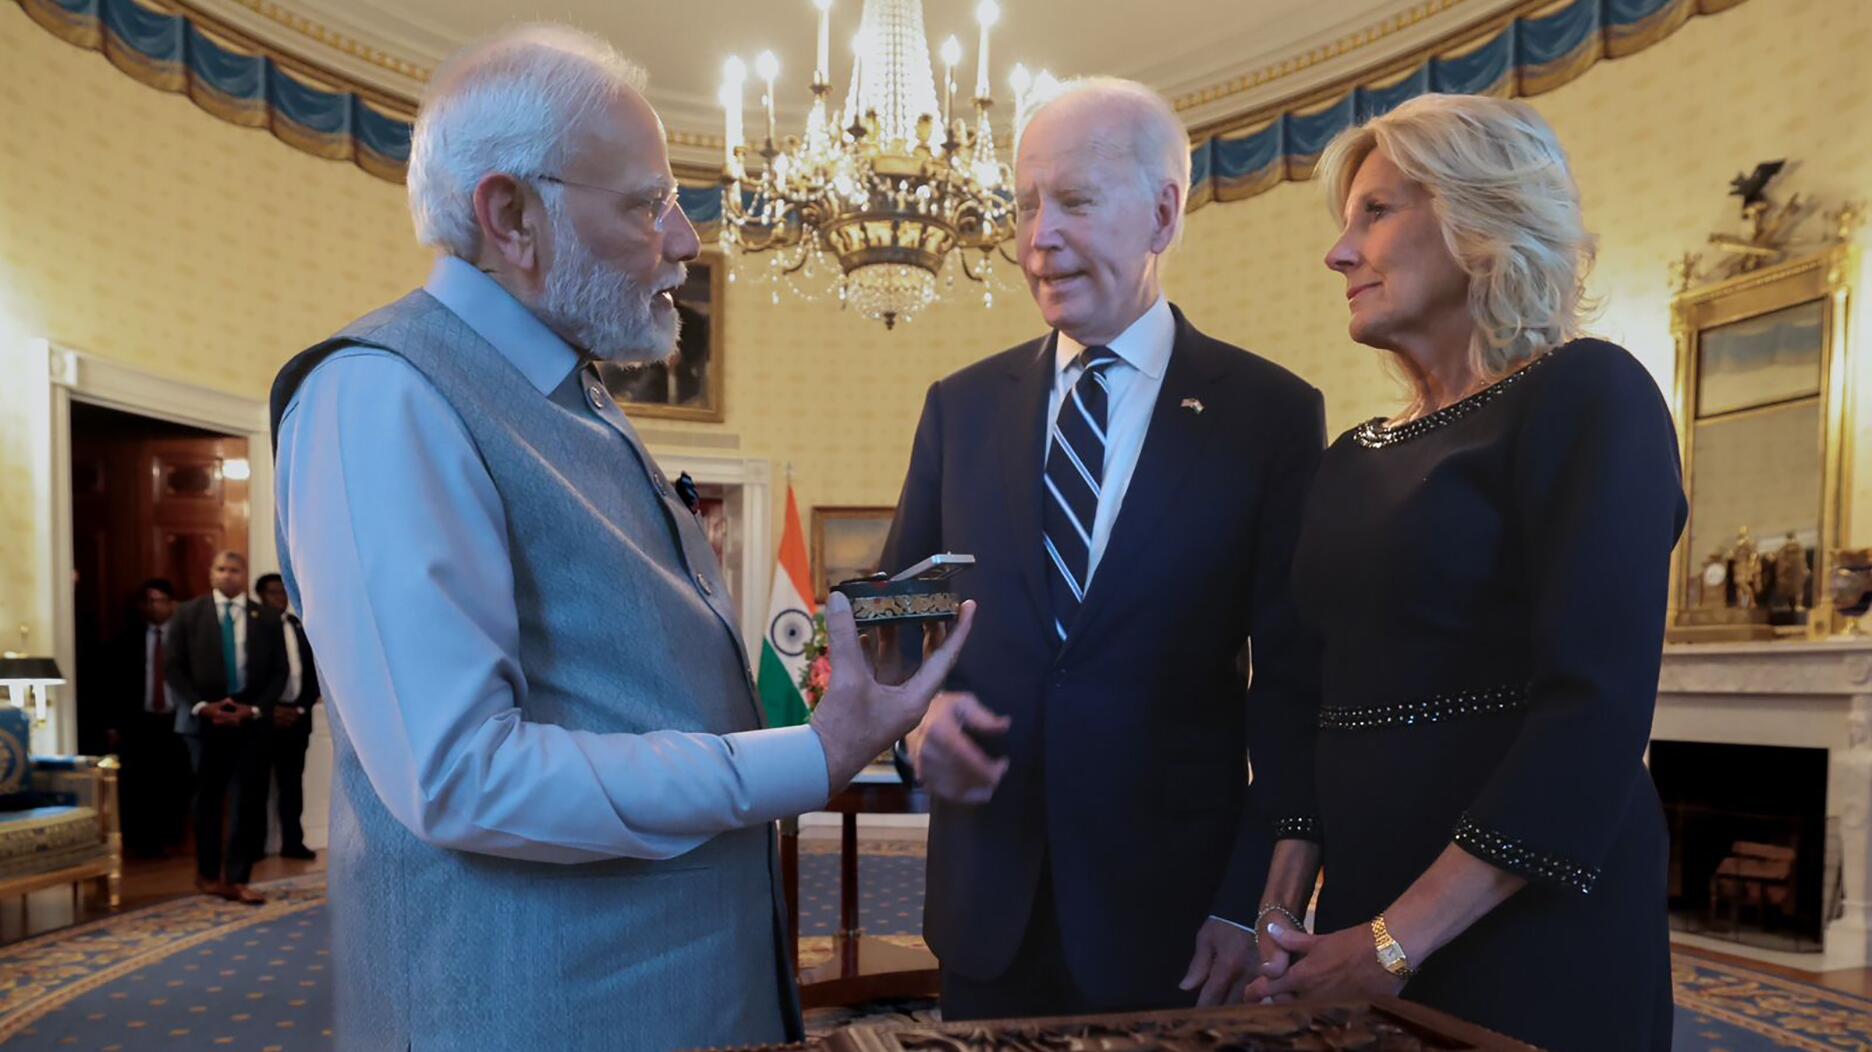 Indian Prime Minister Narendra Modi with U.S. President Joe Biden and First Lady Jill Biden